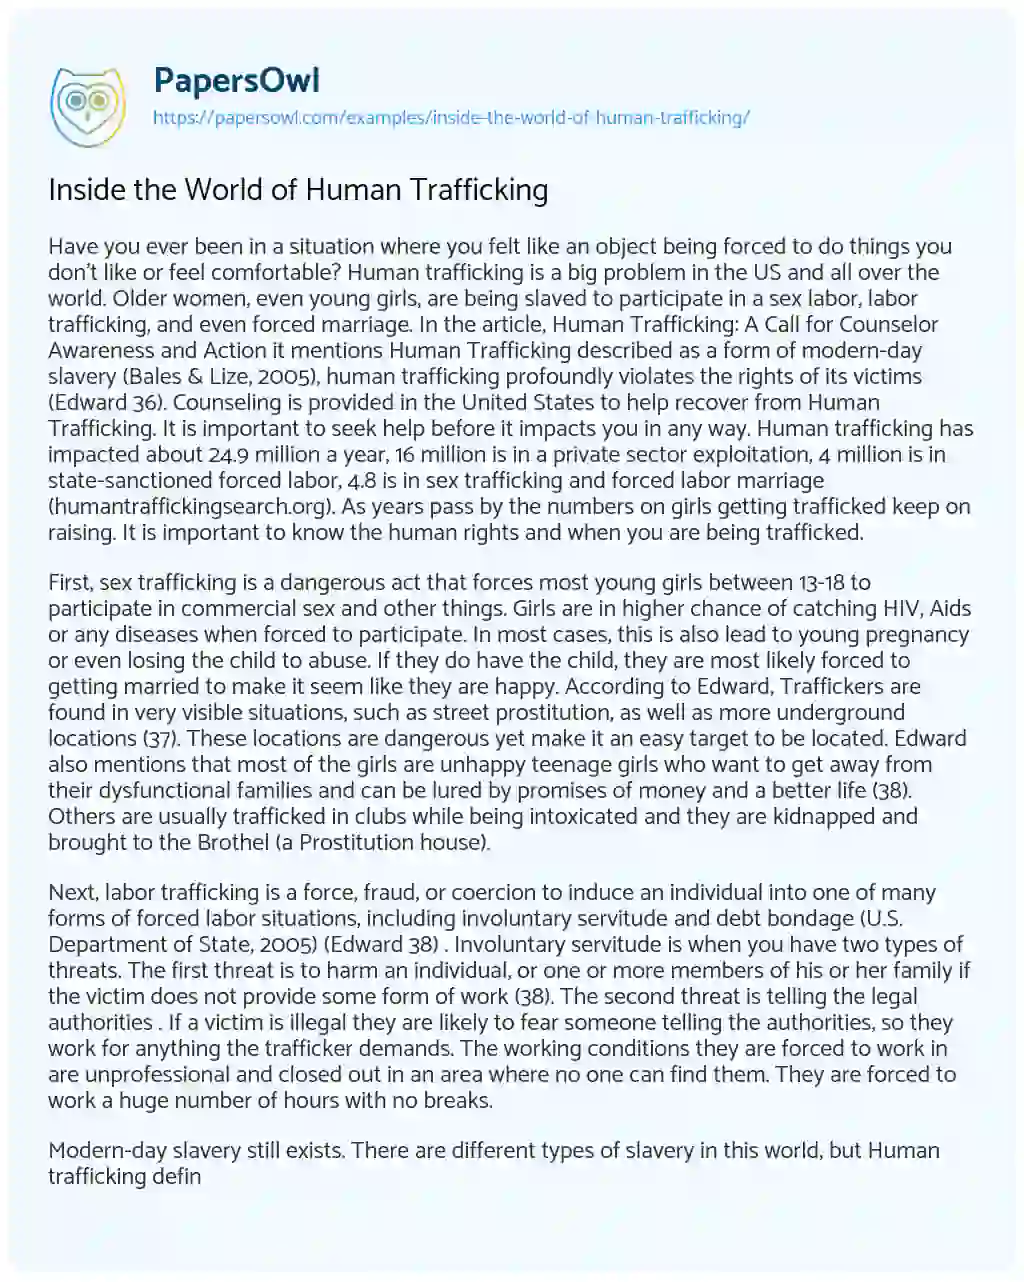 Inside the World of Human Trafficking essay